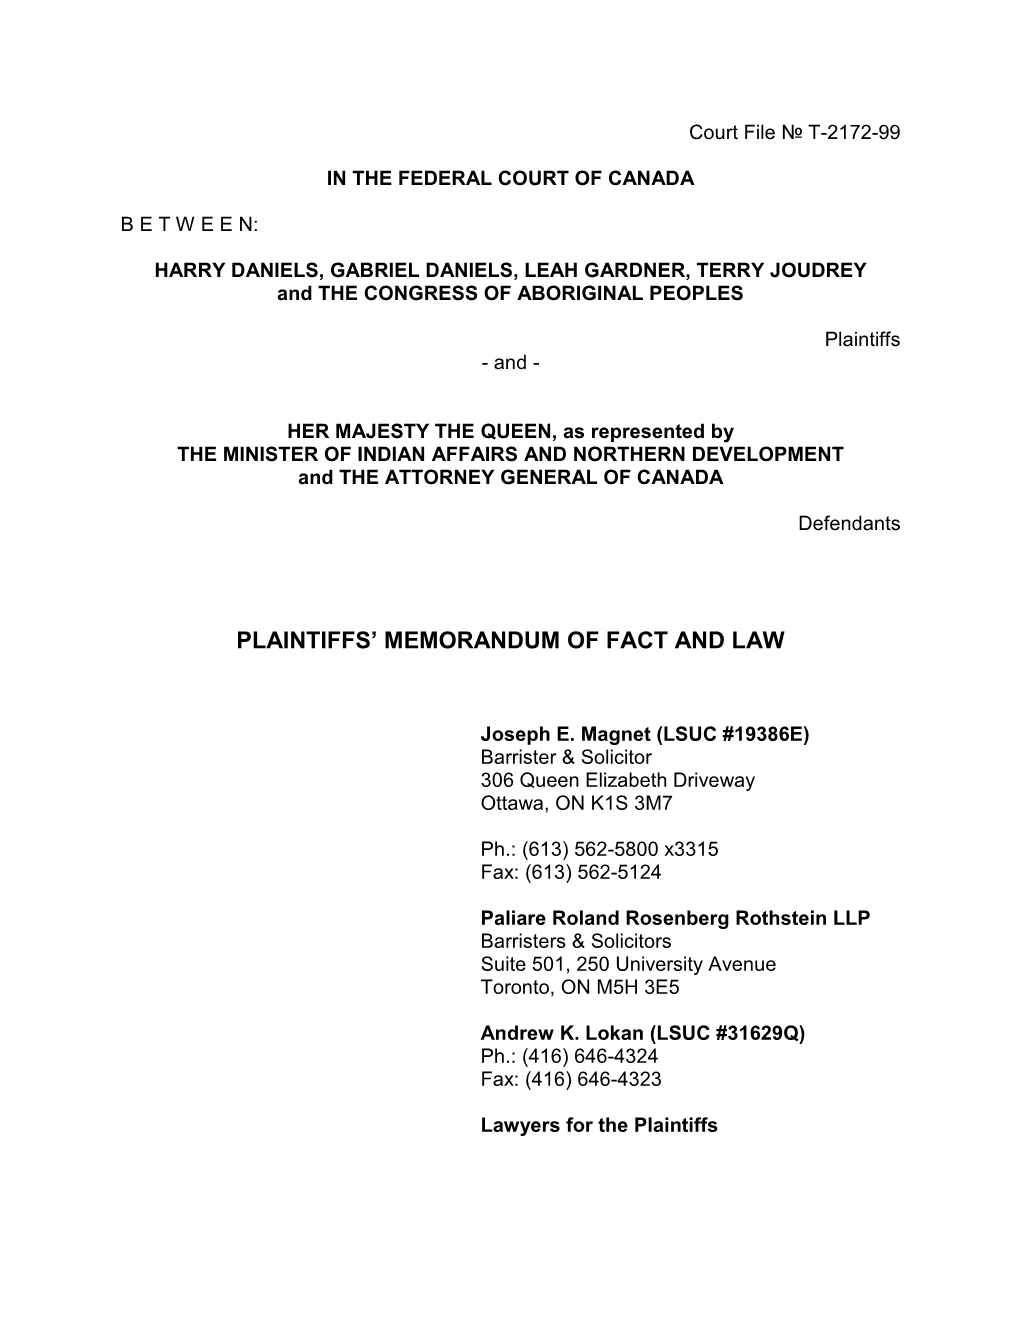 Plaintiffs' Memorandum of Fact And